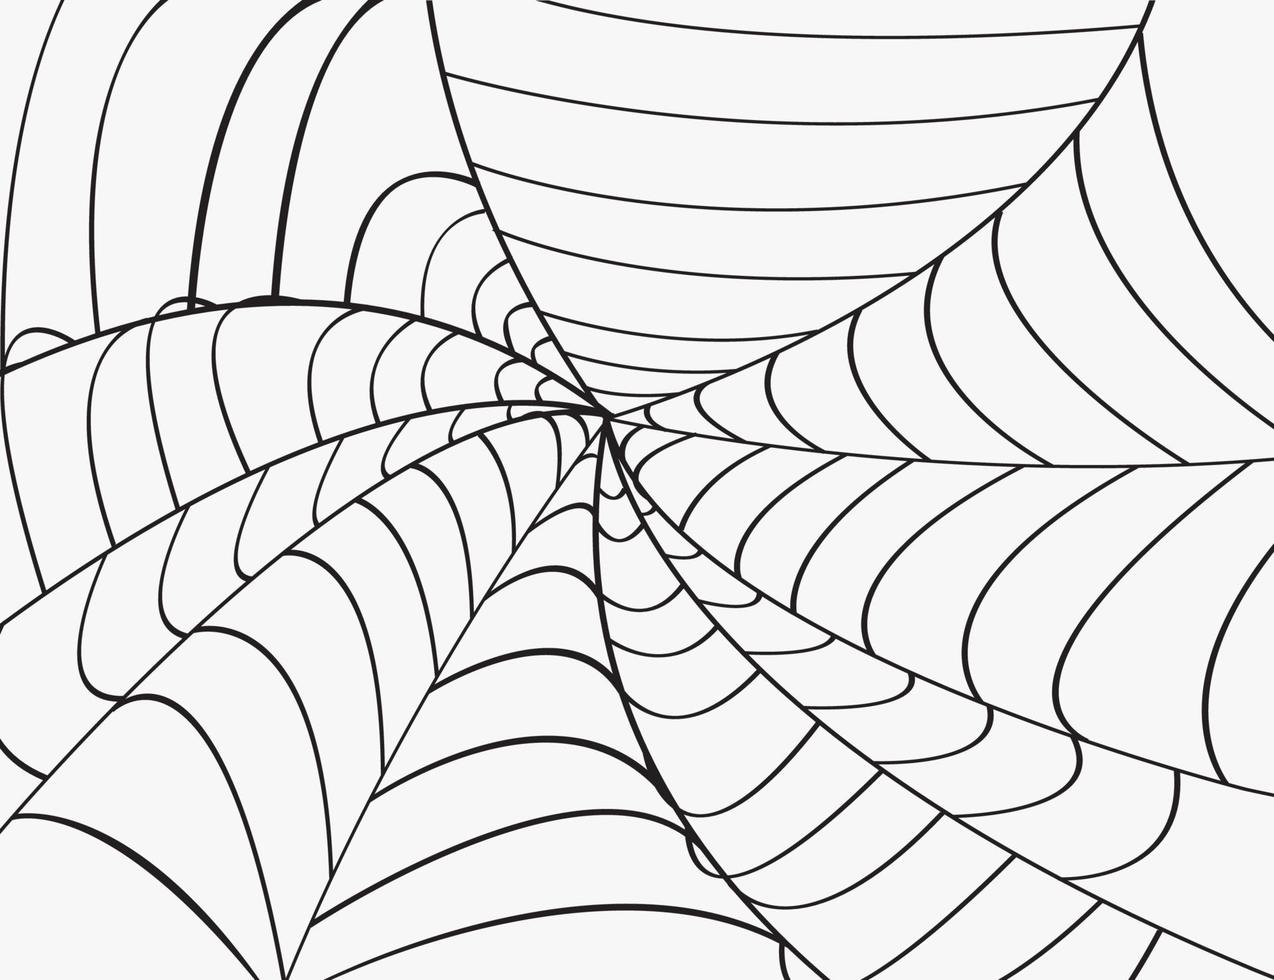 Web mit Spinnenhintergrund. Vektor-Illustration vektor